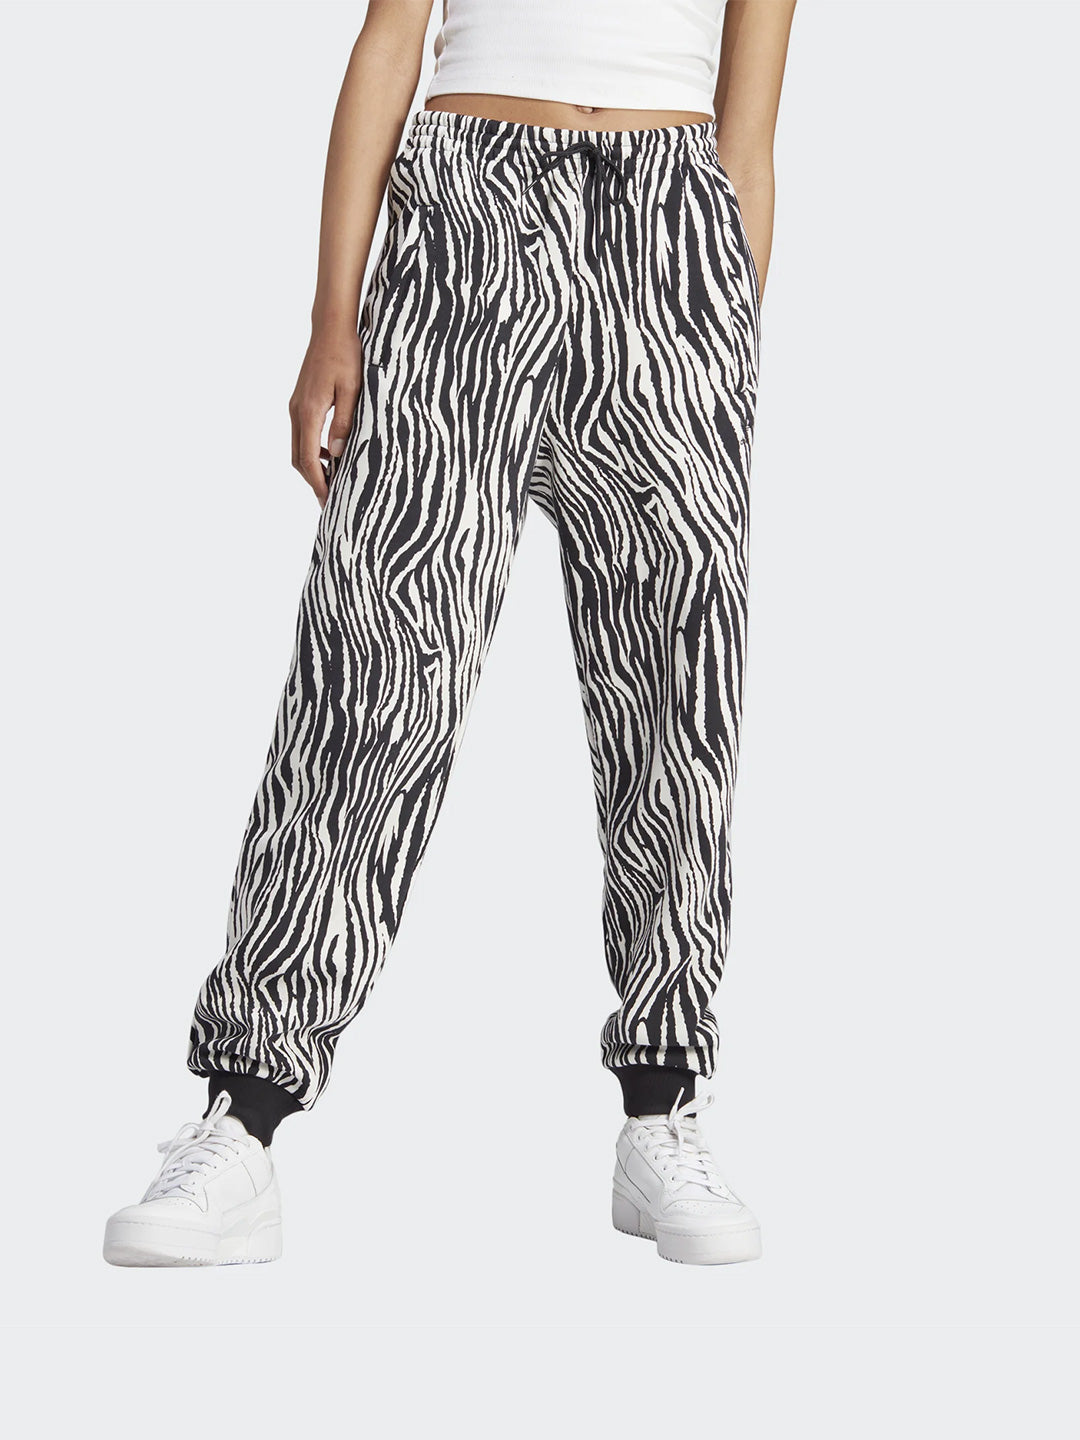 Adidas pantalone zebrato allover